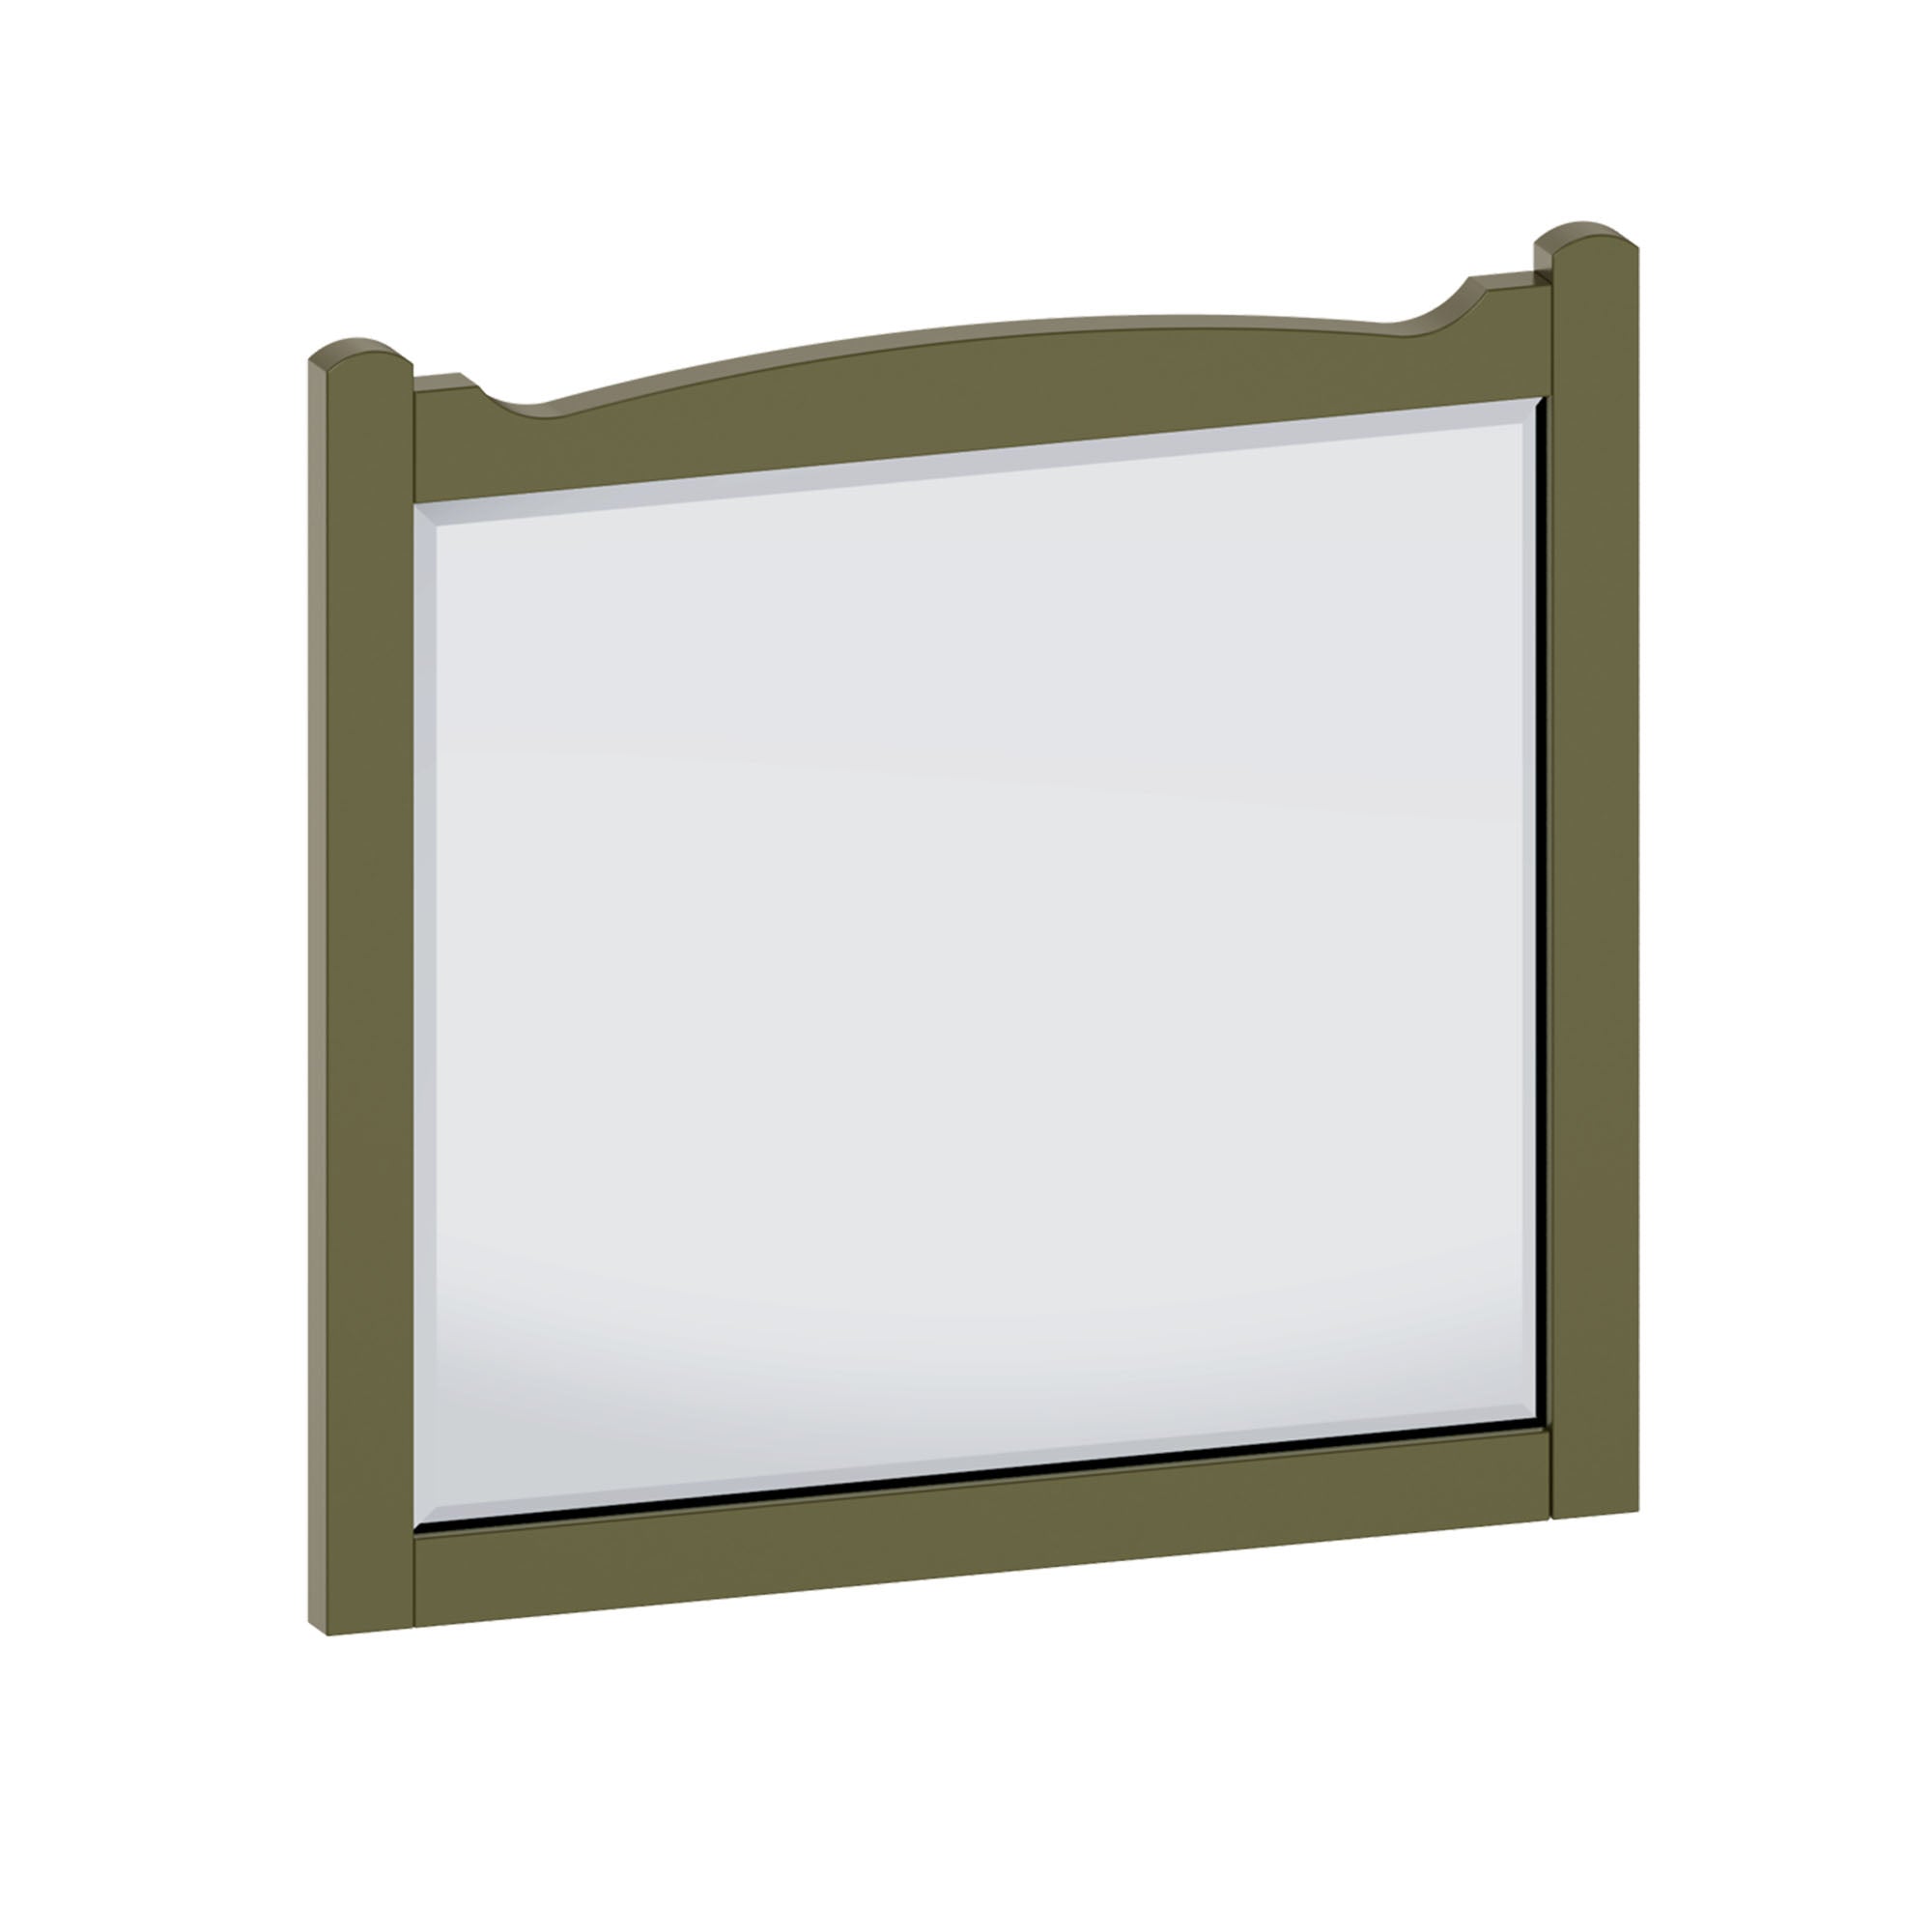 burlington guild 600 framed bathroom mirror carlyle green